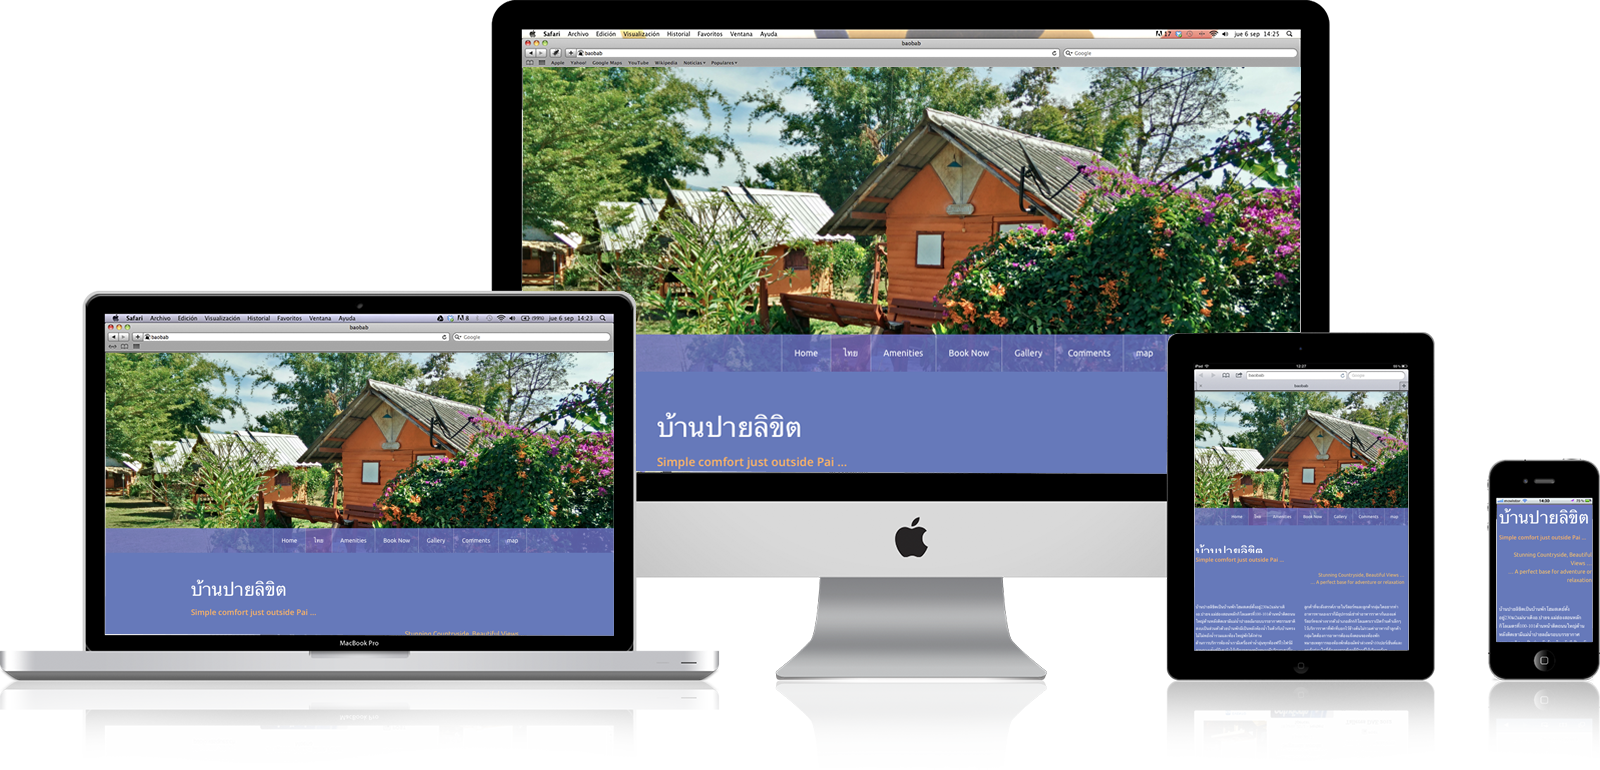 Multilingual Website design for Pai-riikit.com - a resort in Pai Thailand